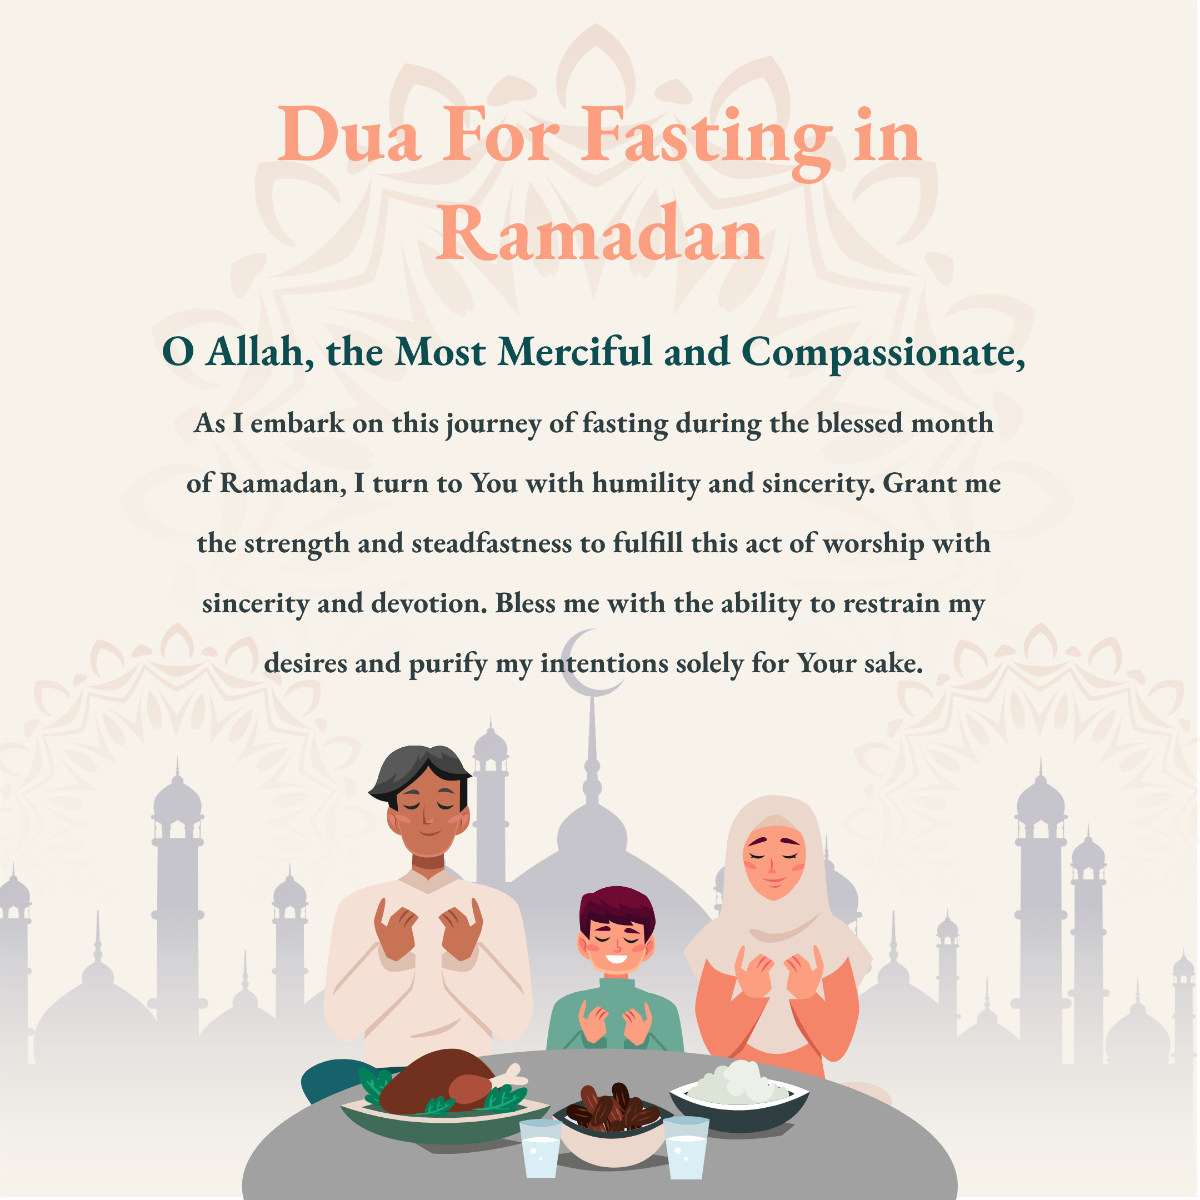 Dua For Fasting in Ramadan